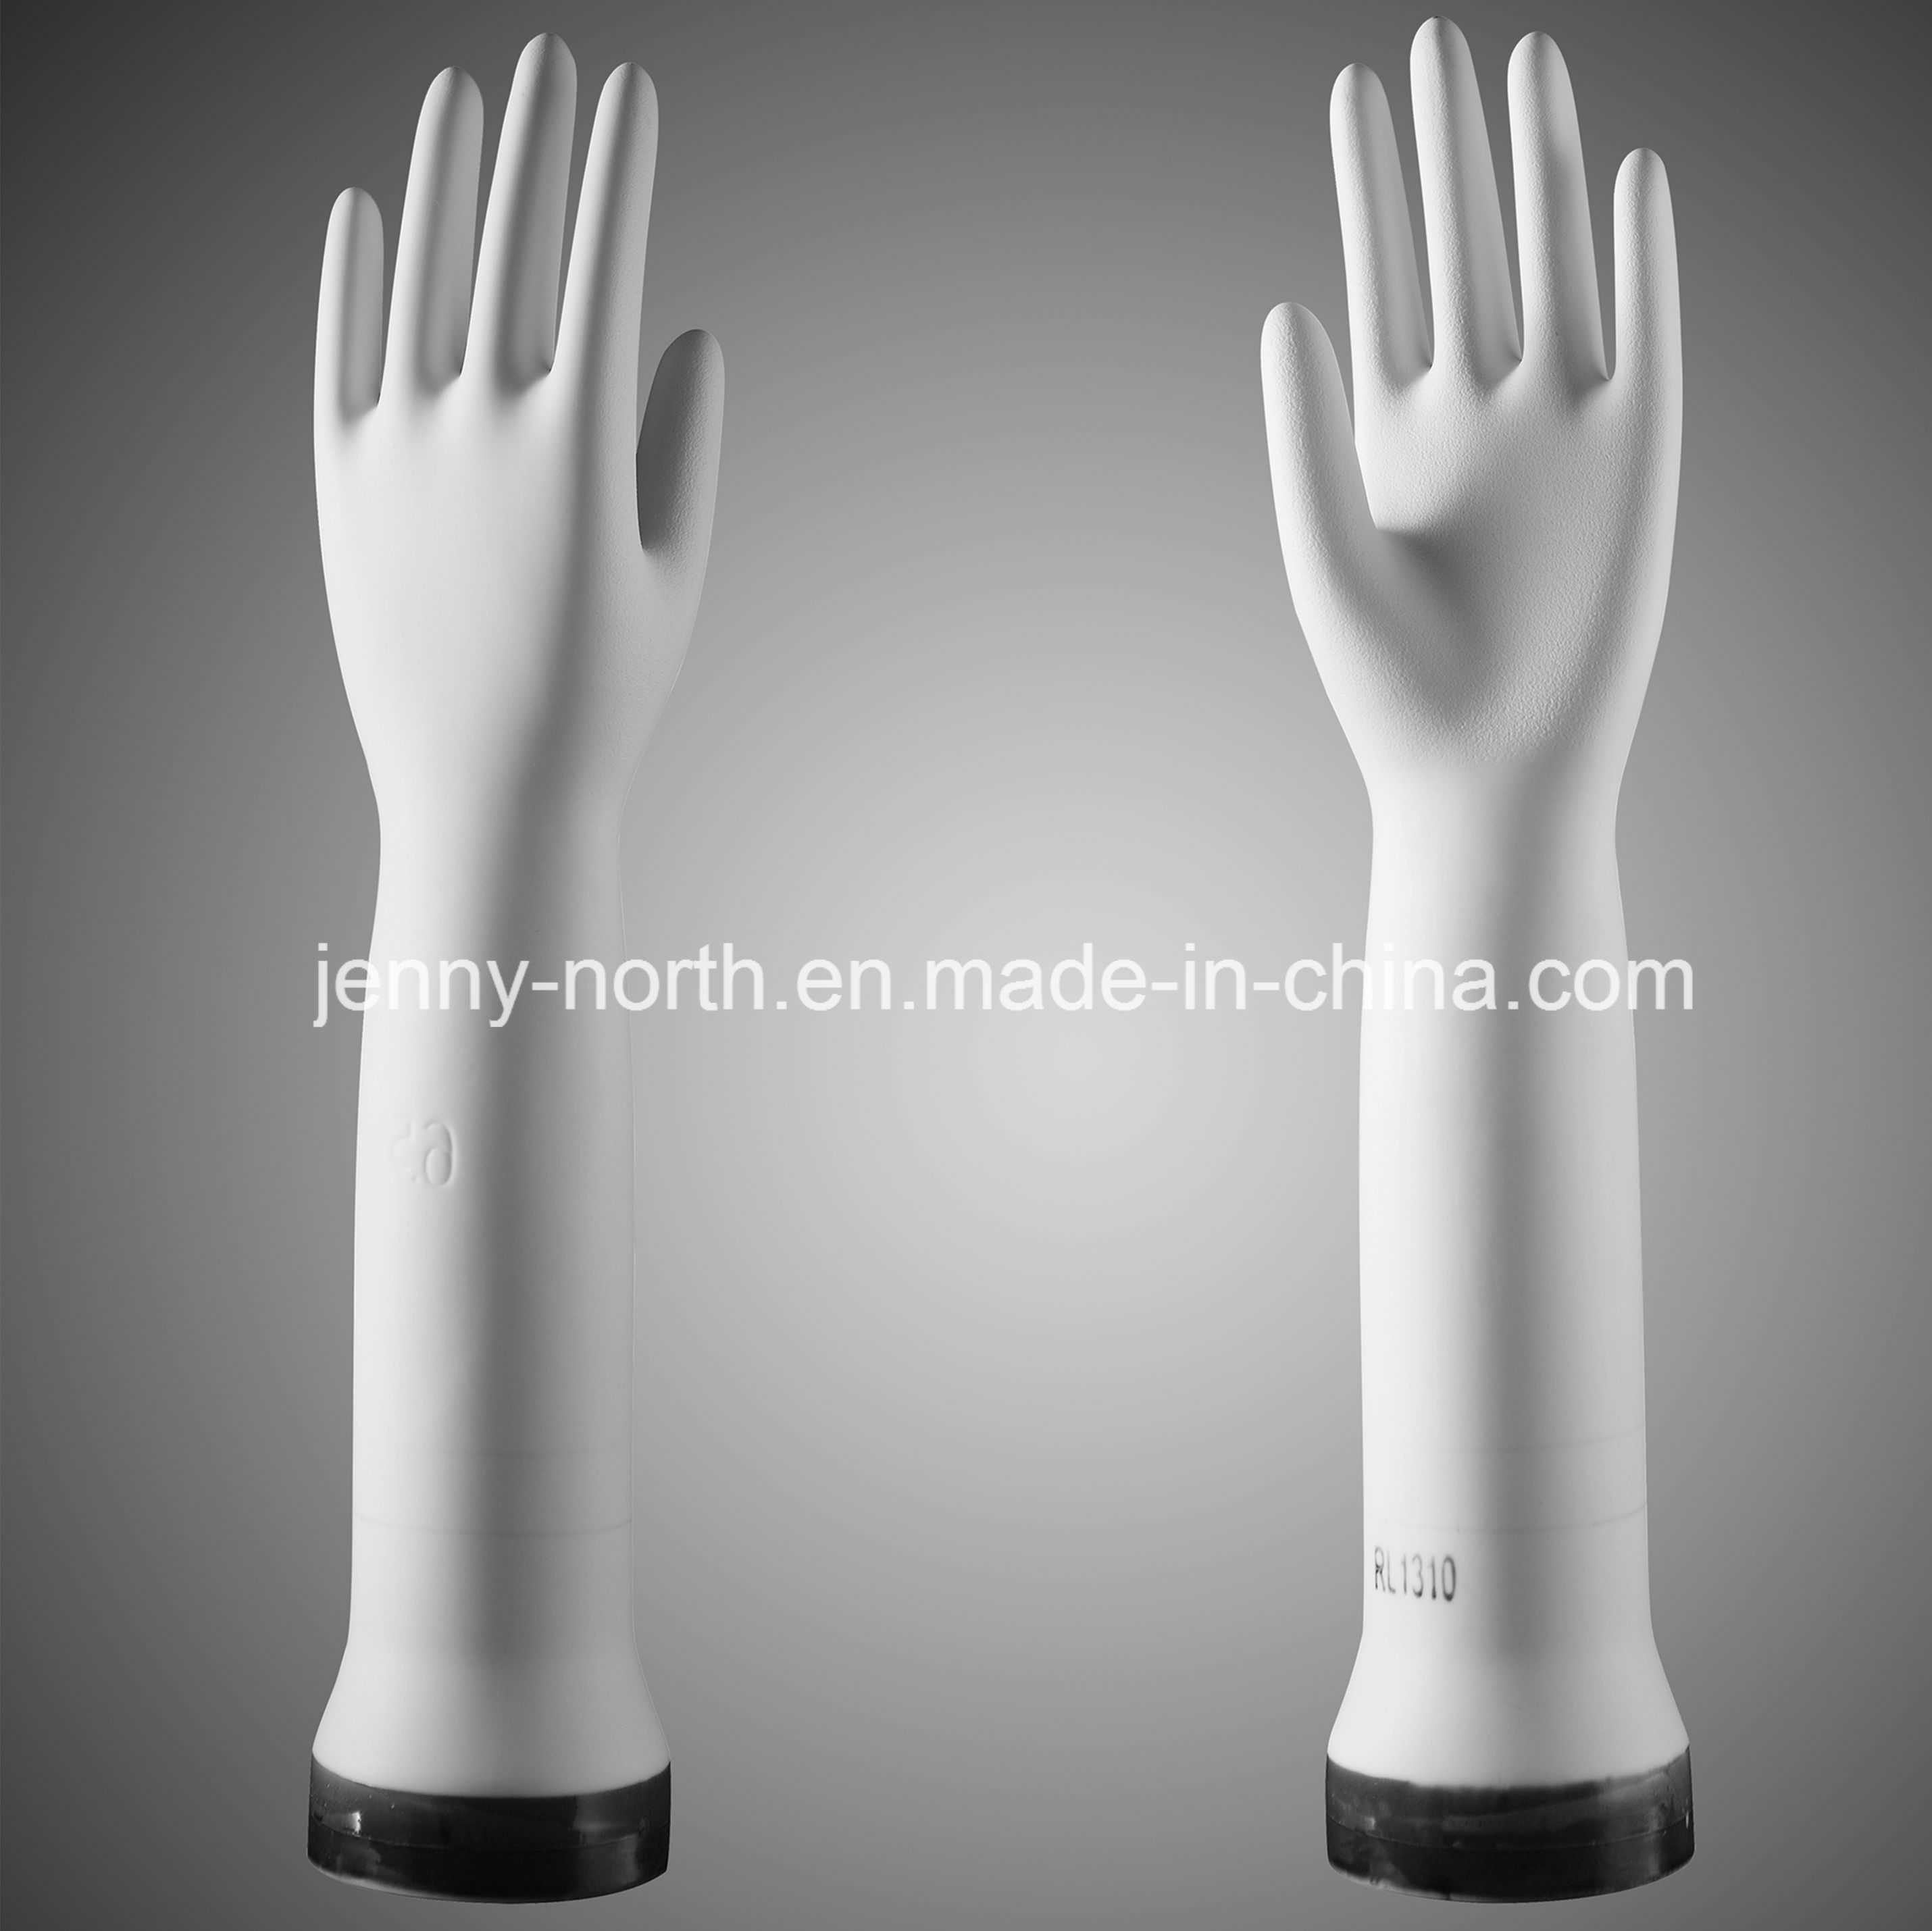 Pitted Curved Ceramic Former for Medical Gloves